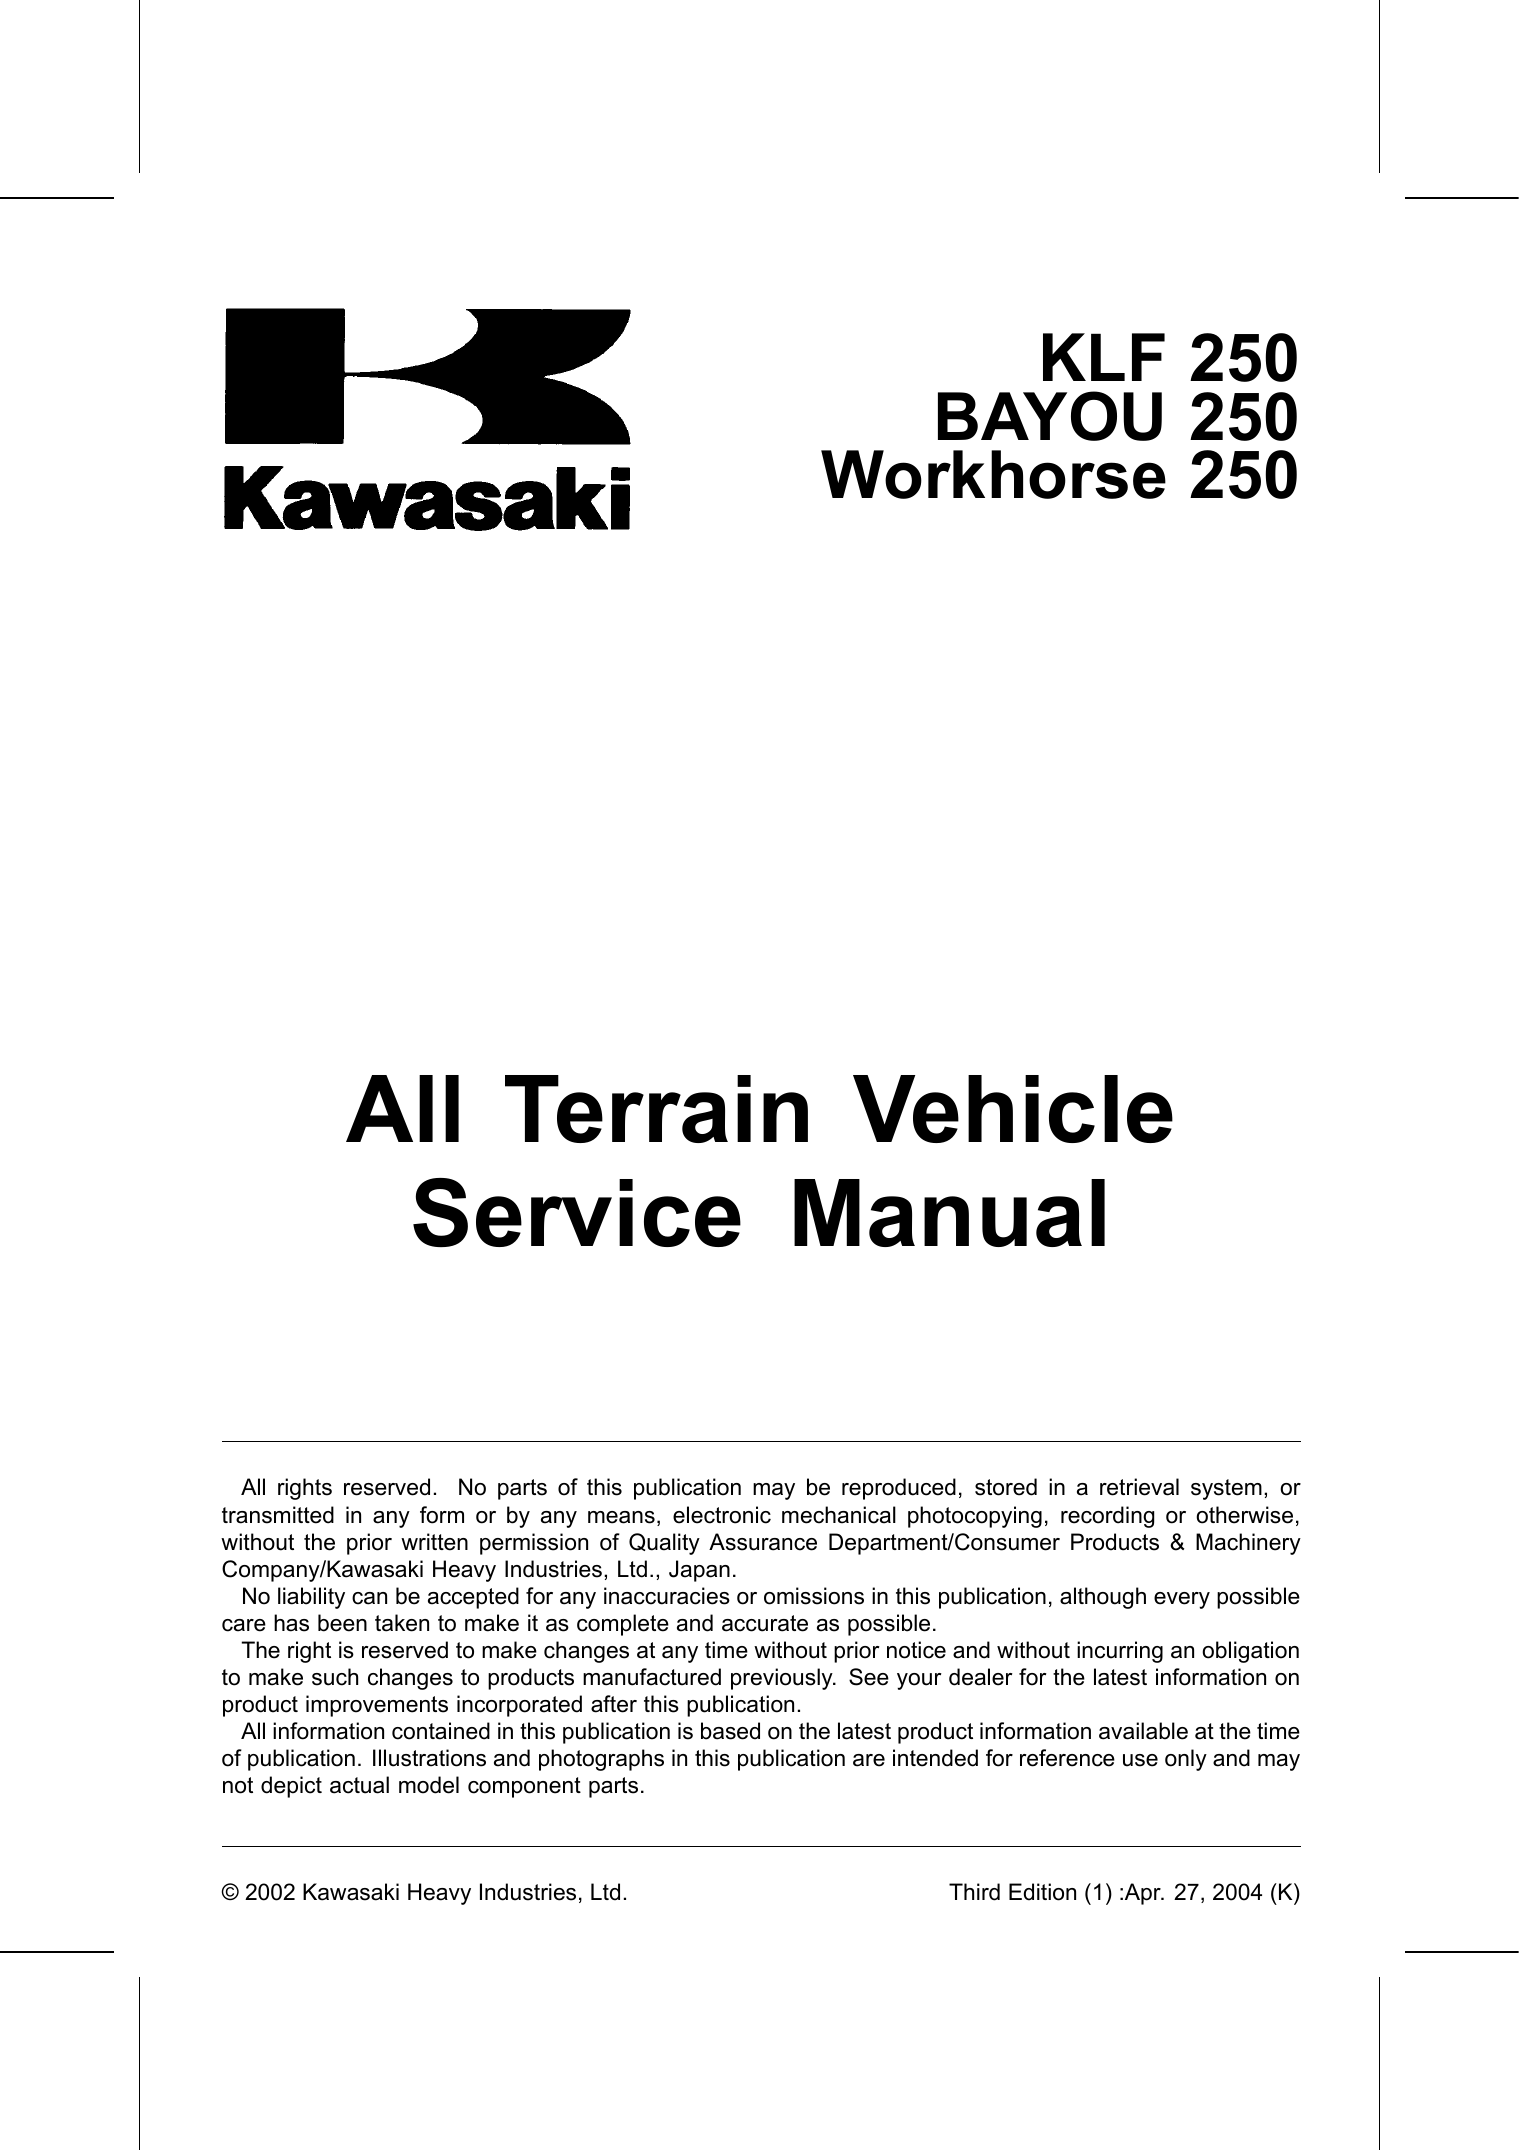 2003-2009 Kawasaki KLF-250, Bayou 250, Workhorse 250 ATV service manual Preview image 5